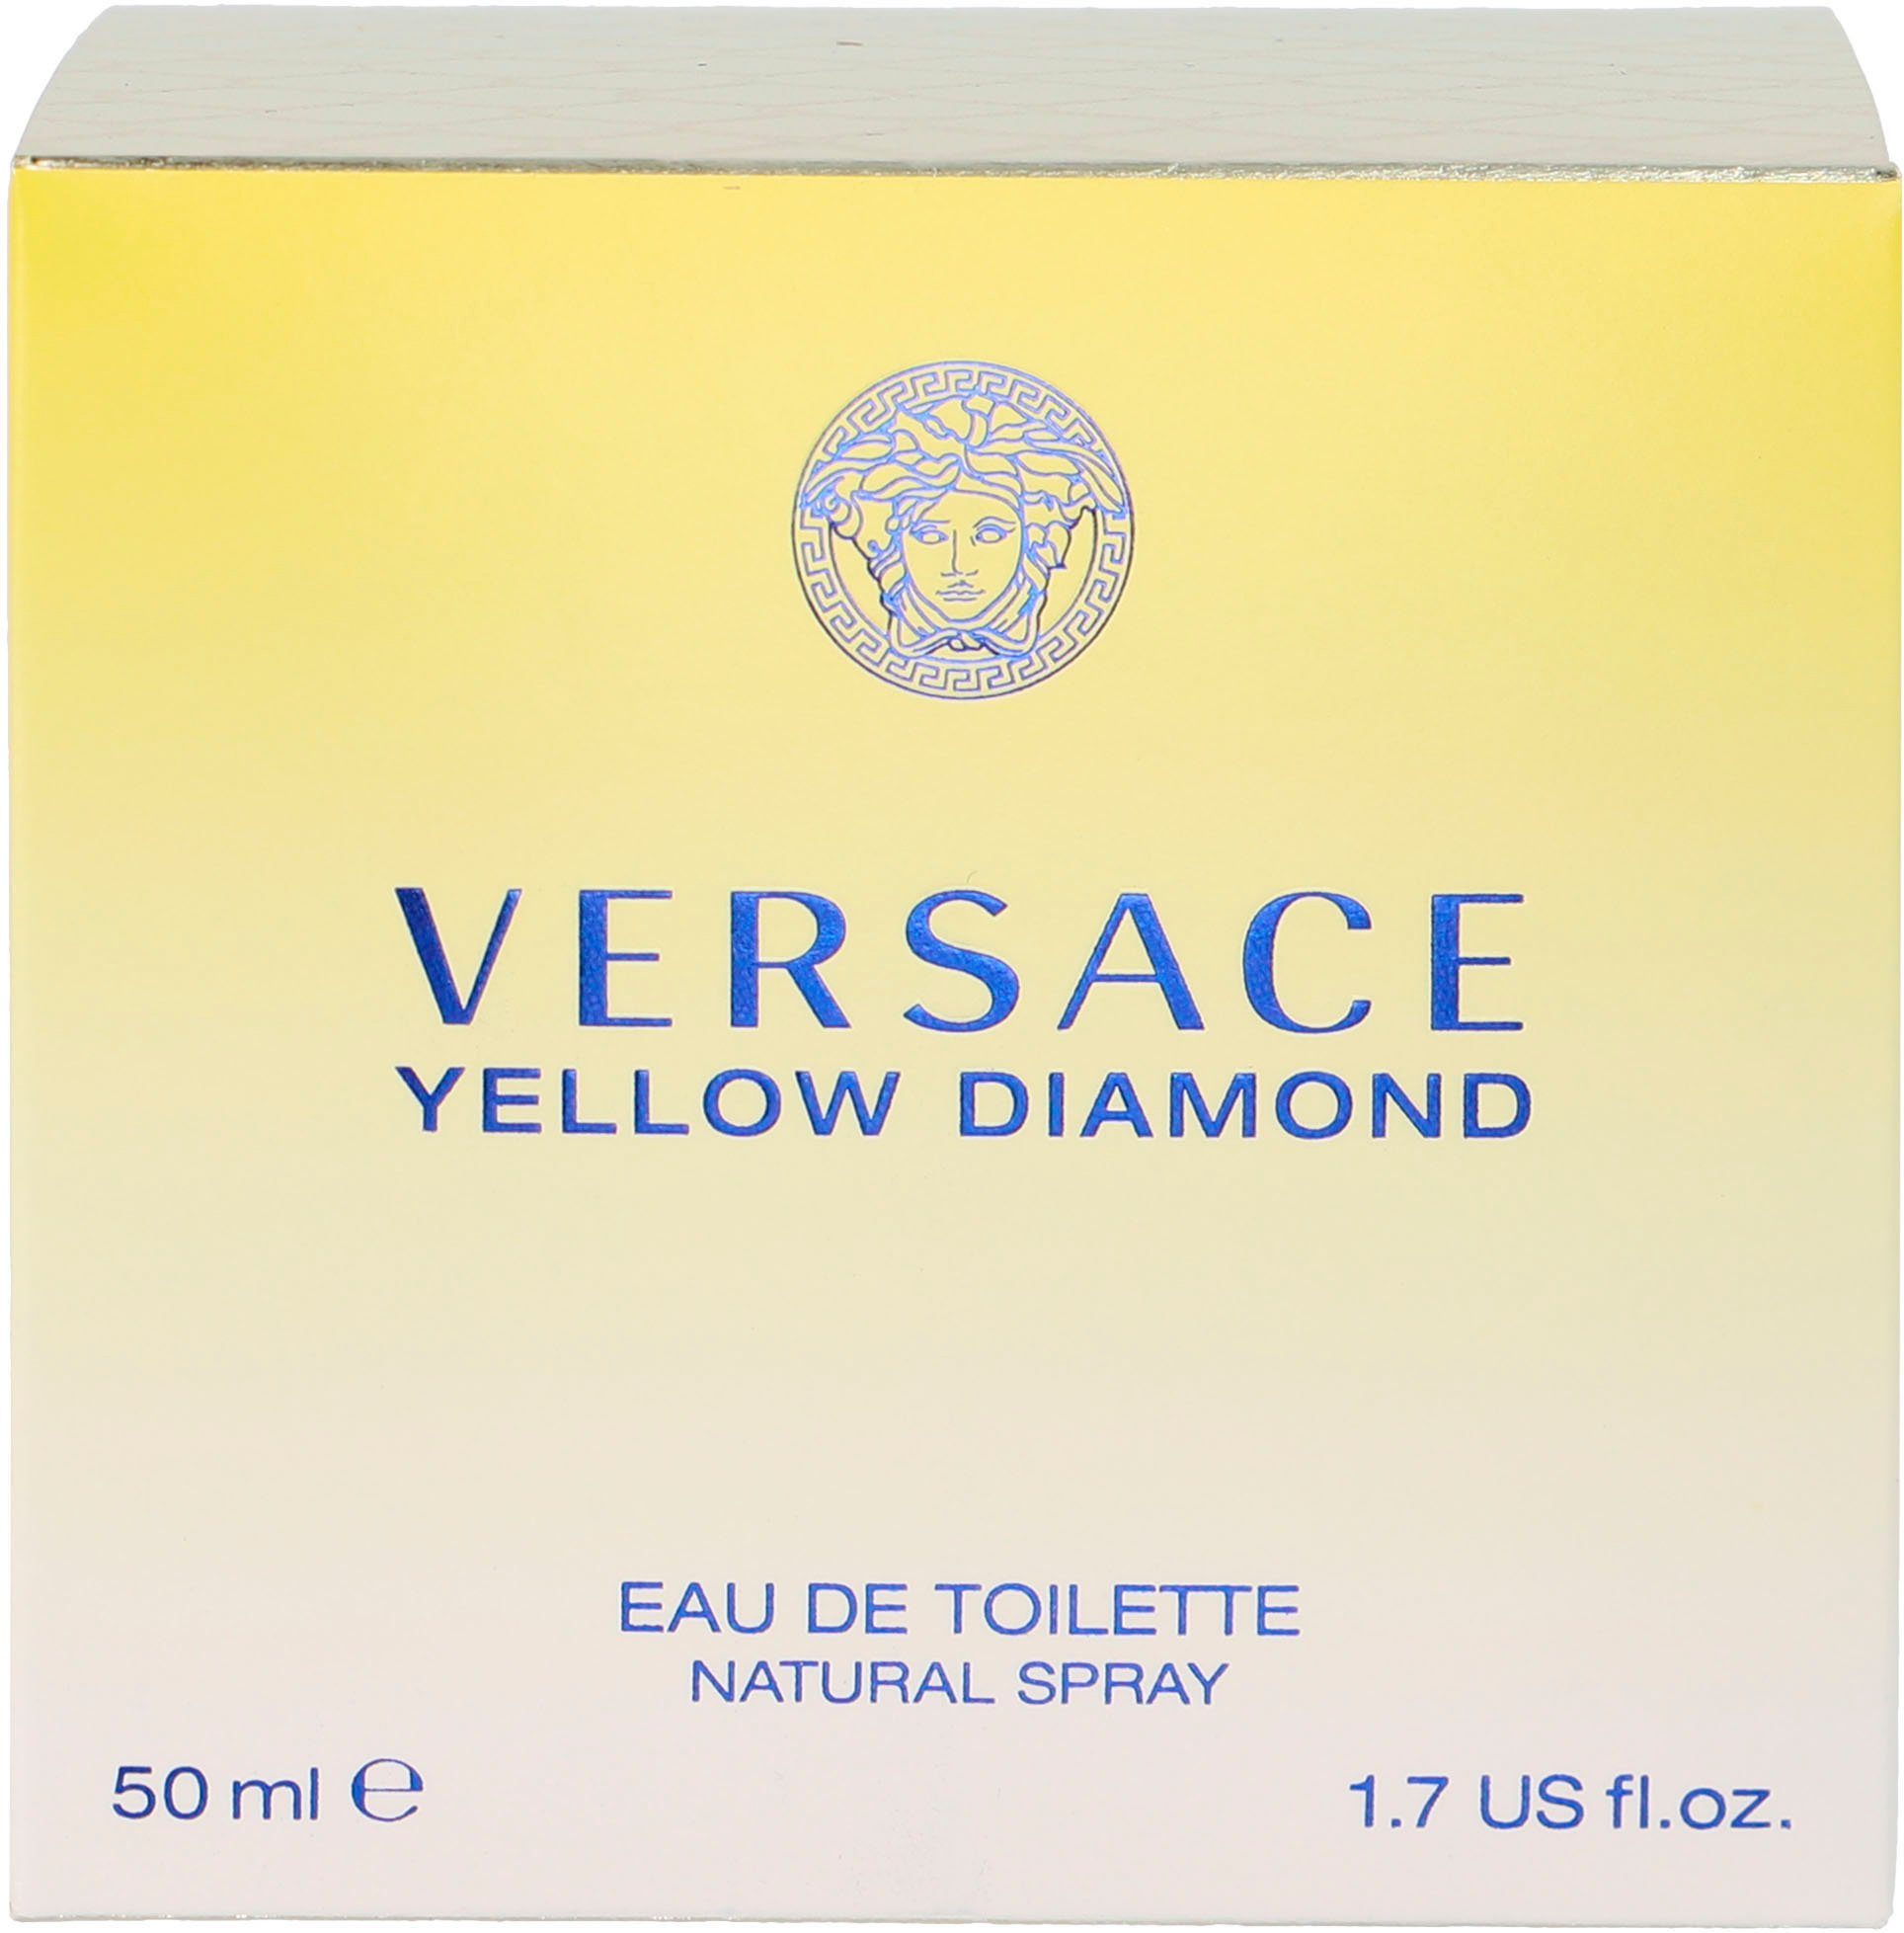 Yellow Eau Toilette de Versace Diamonds